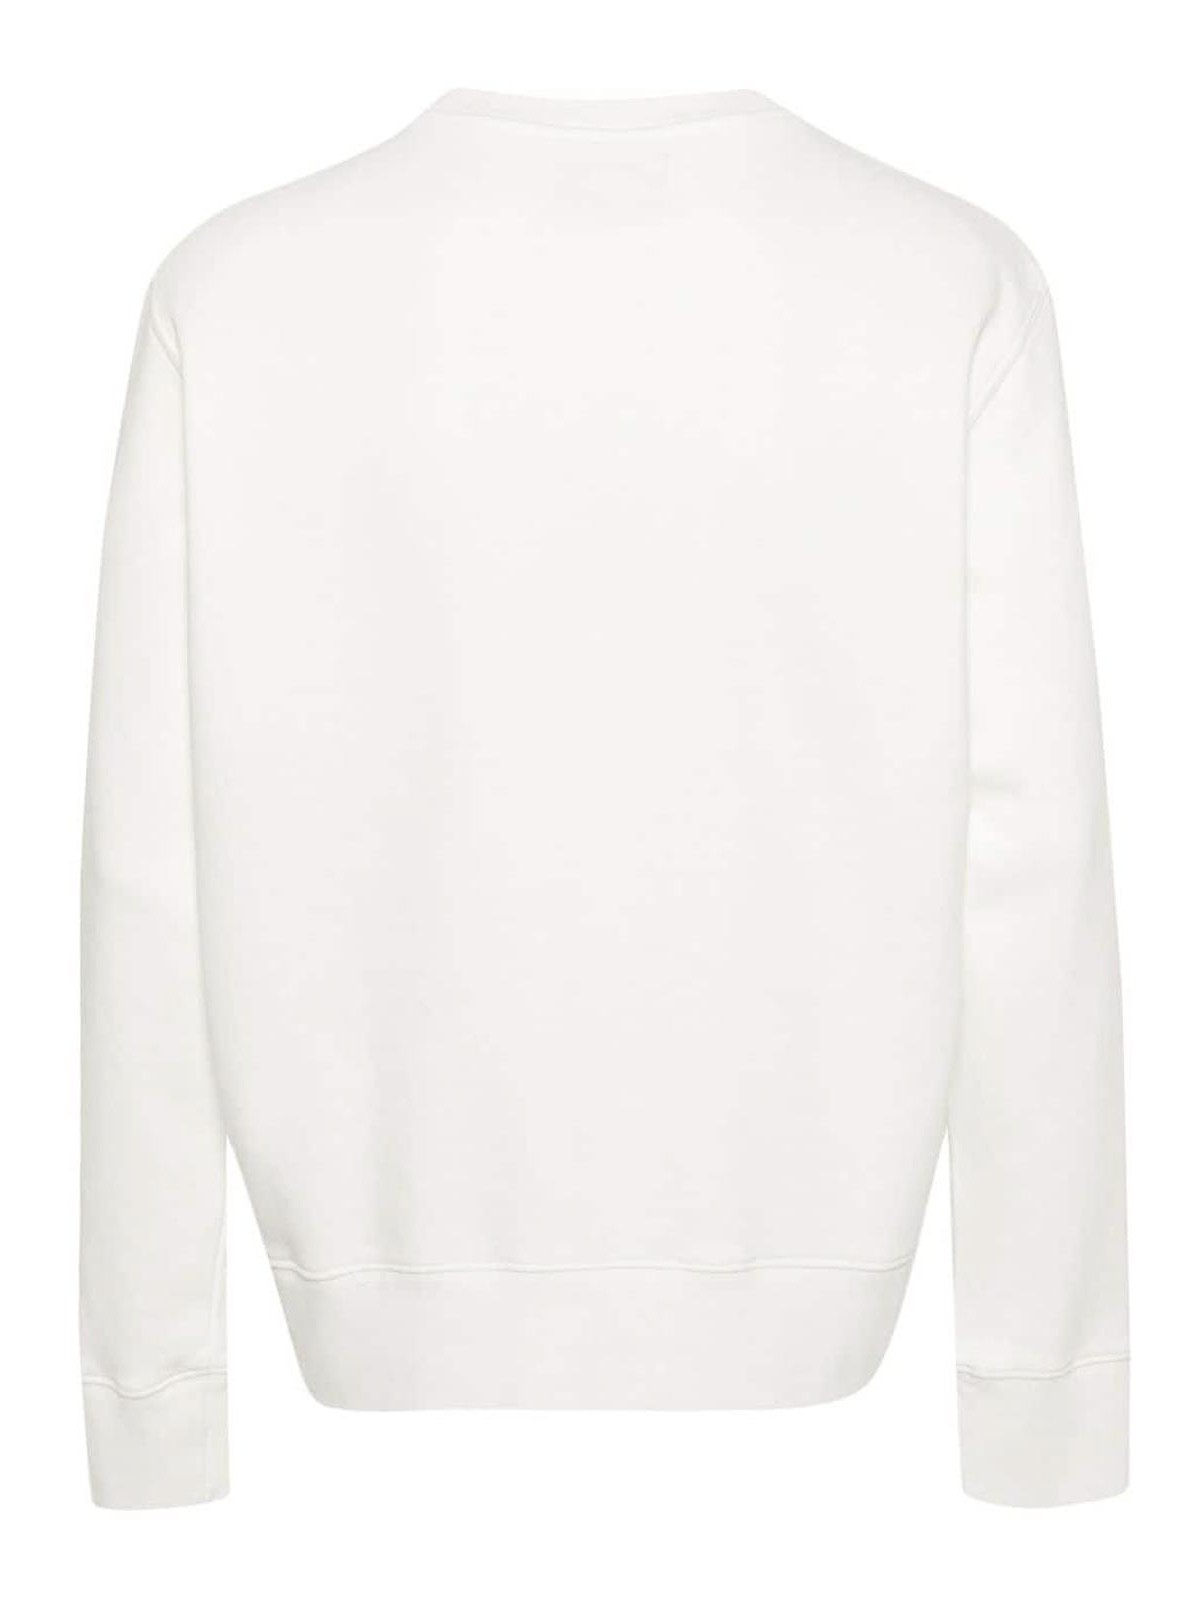 Shop Autry Sweatshirt With Logo In White